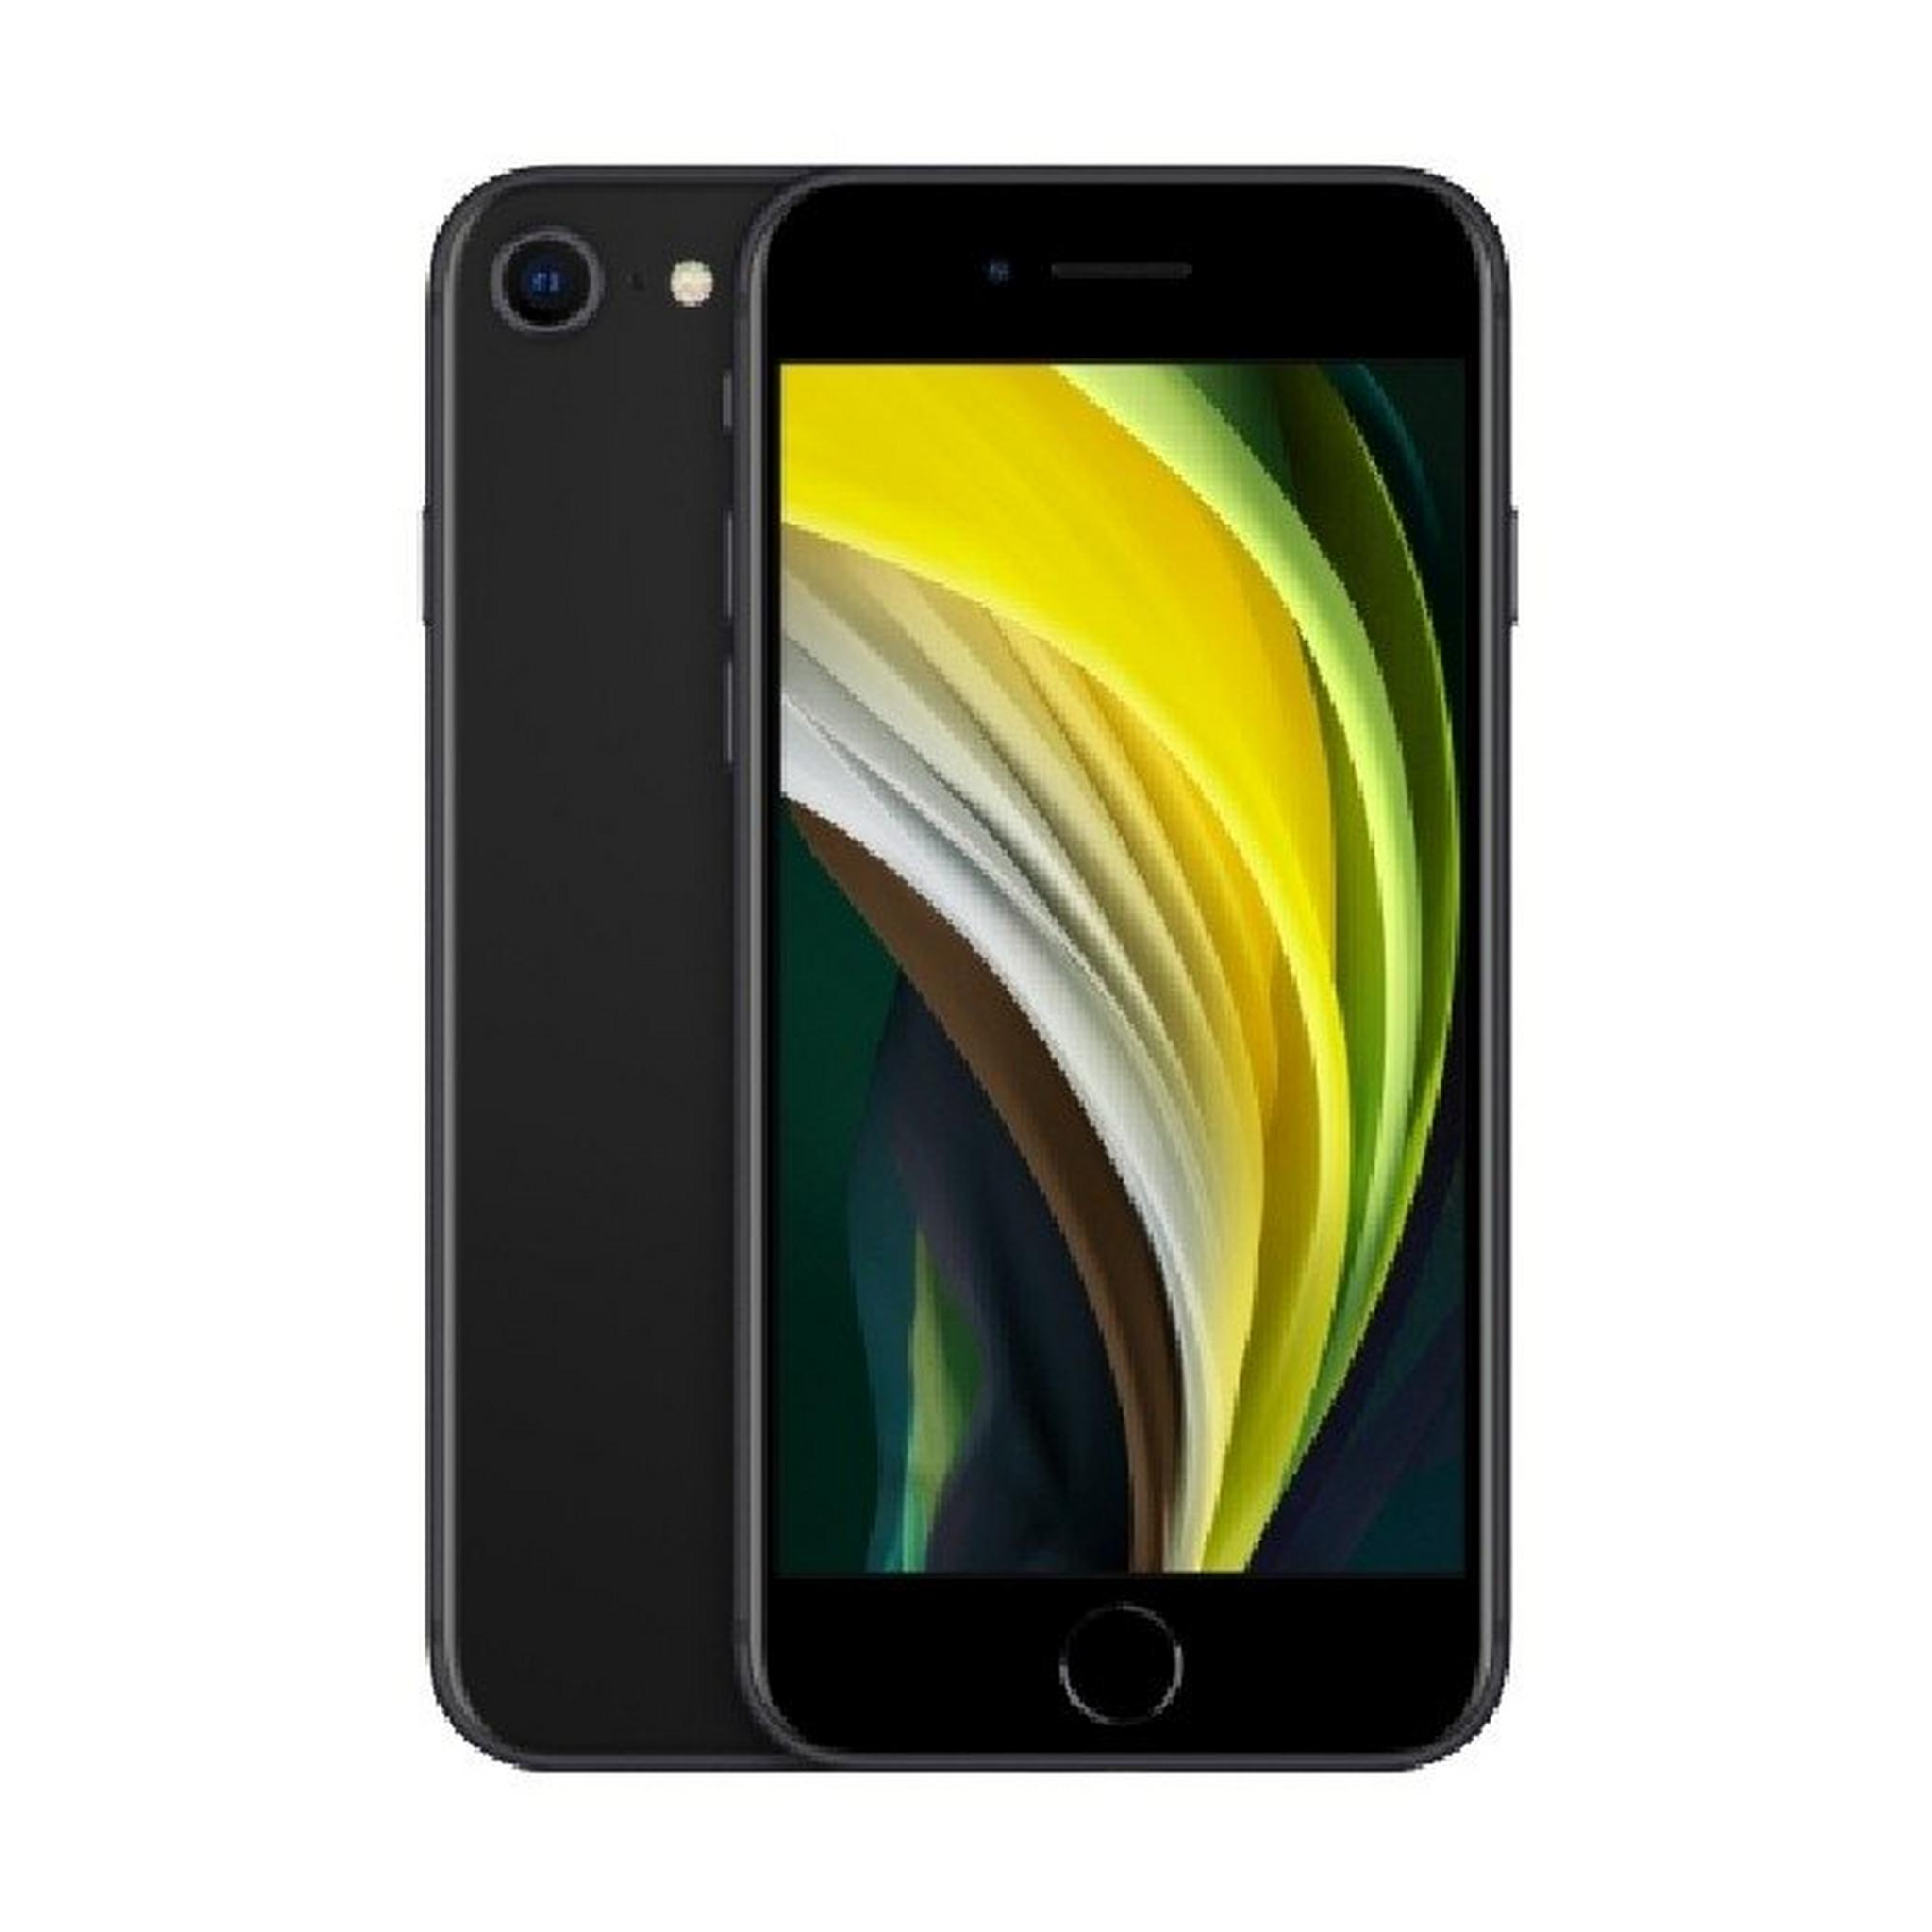 Apple iPhone SE 64GB Phone - Black